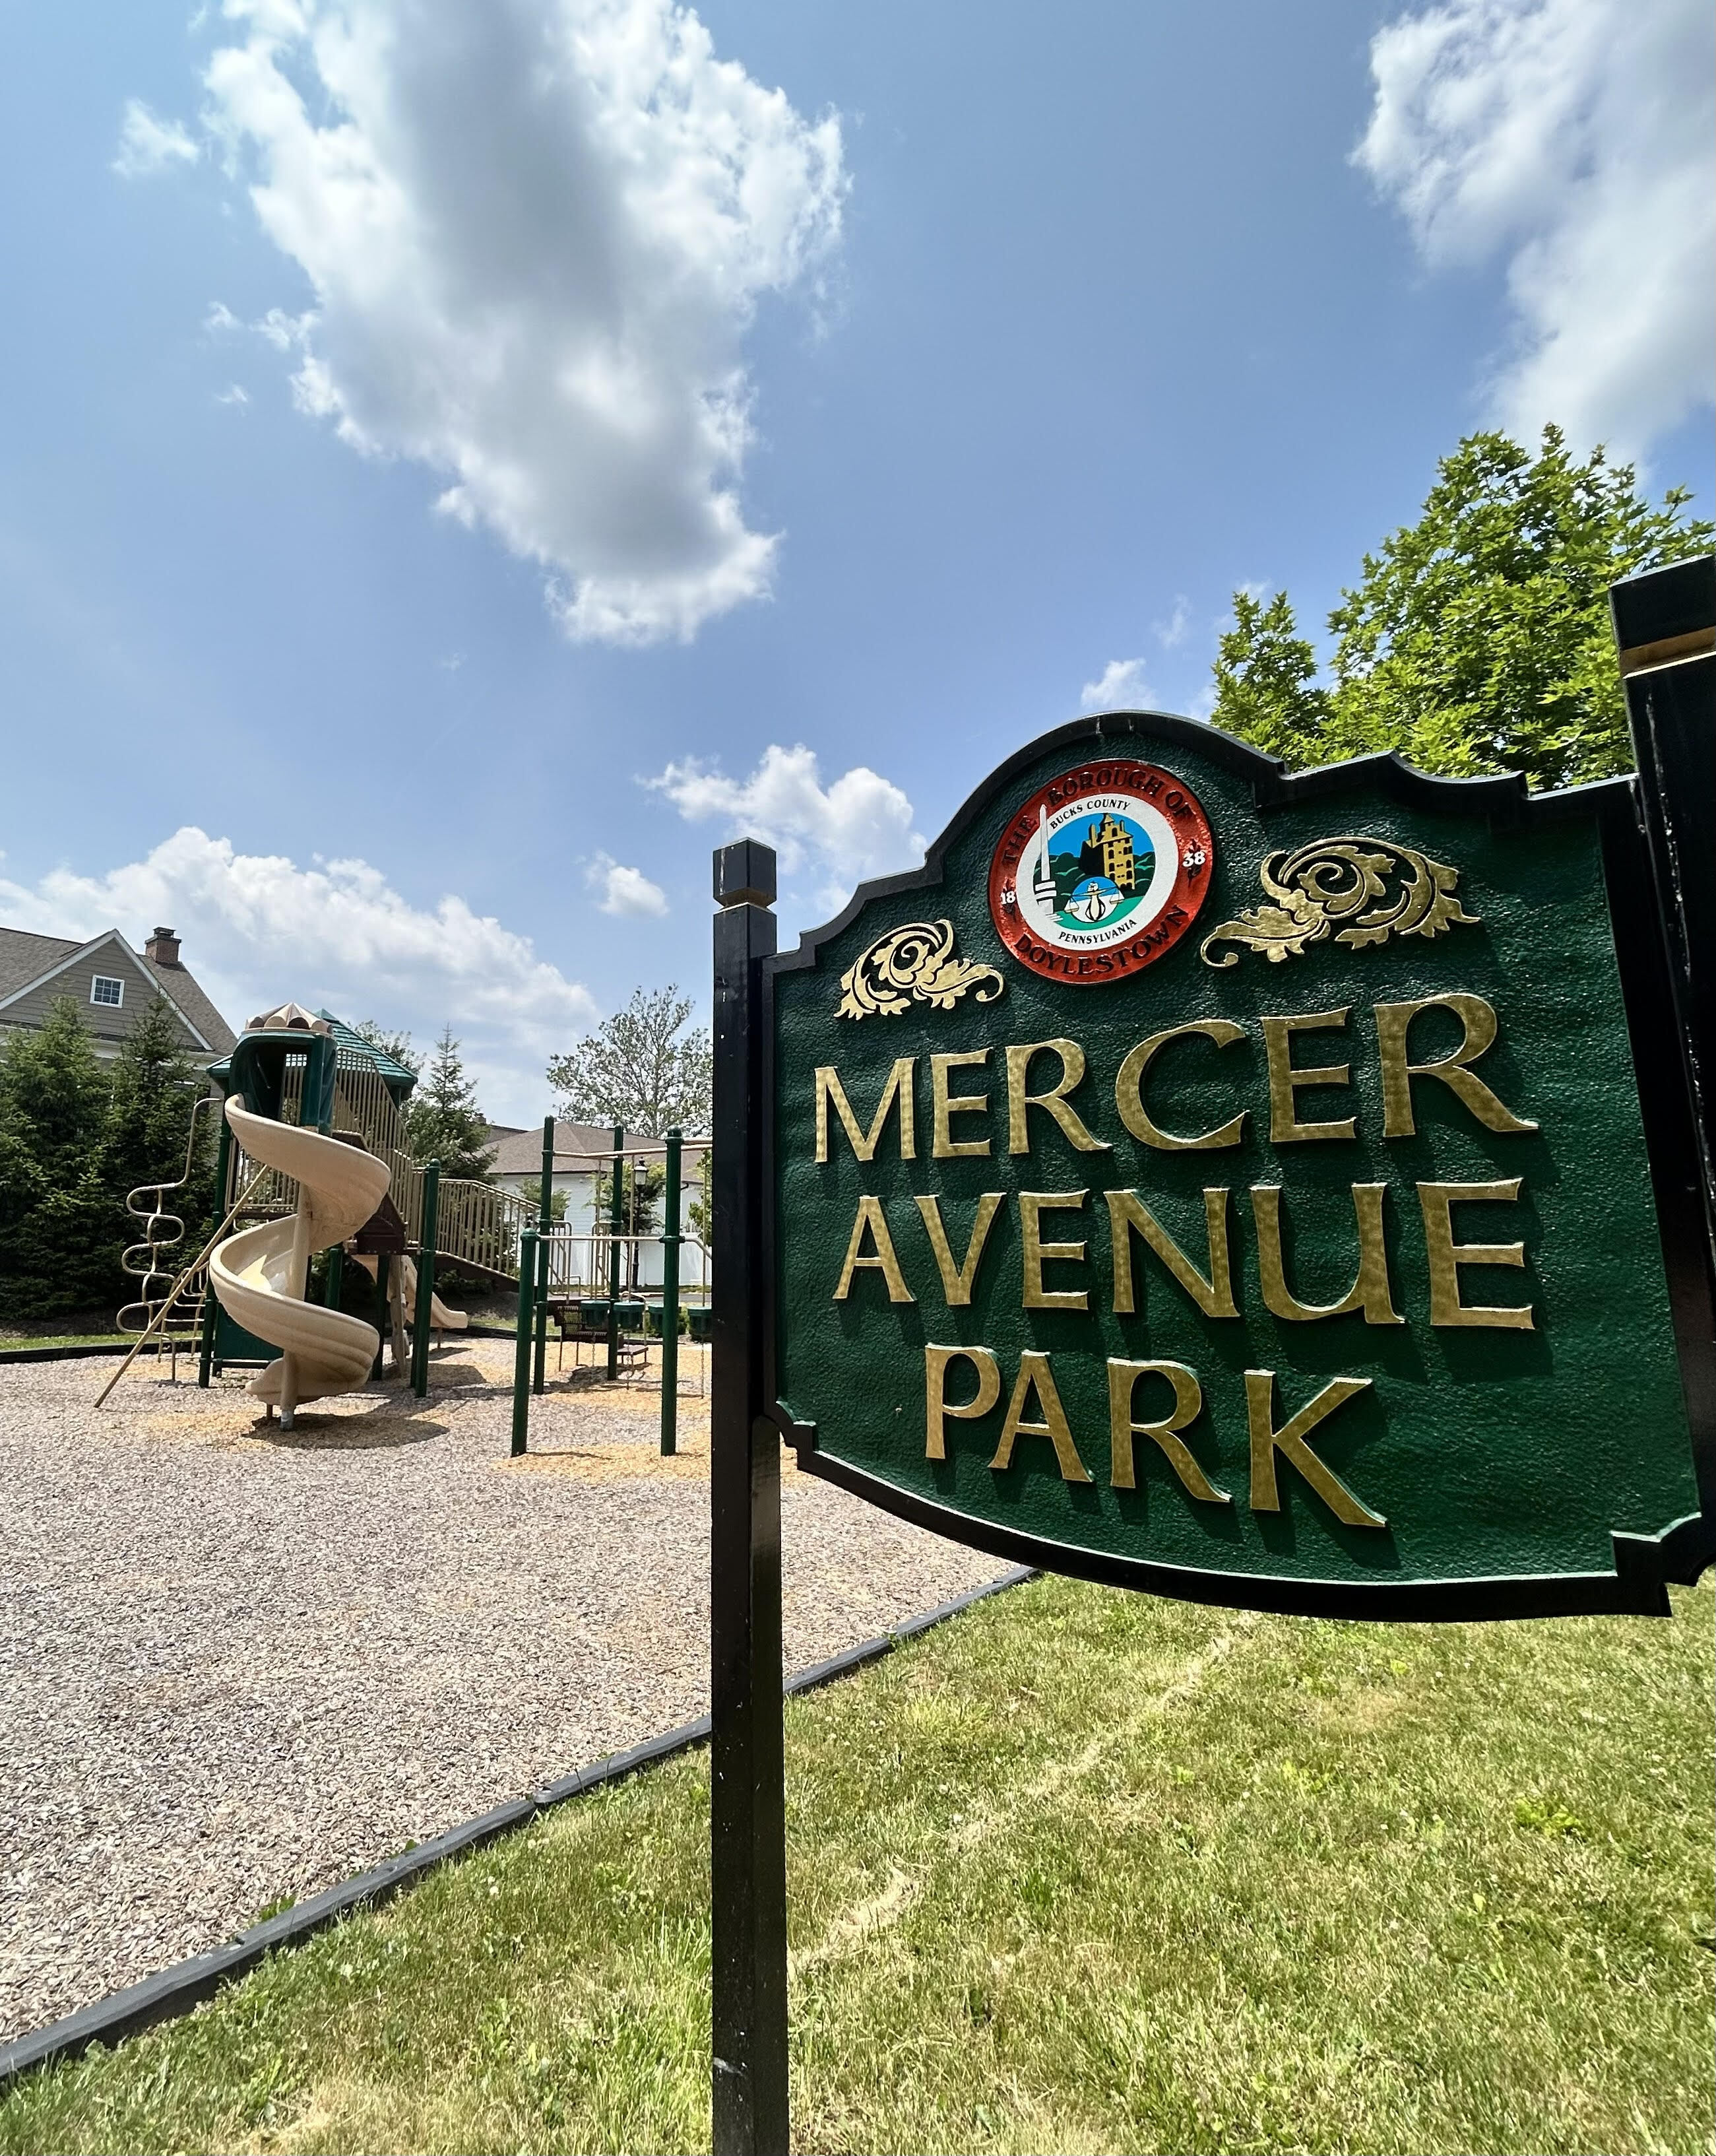 Mercer avenue park place holder